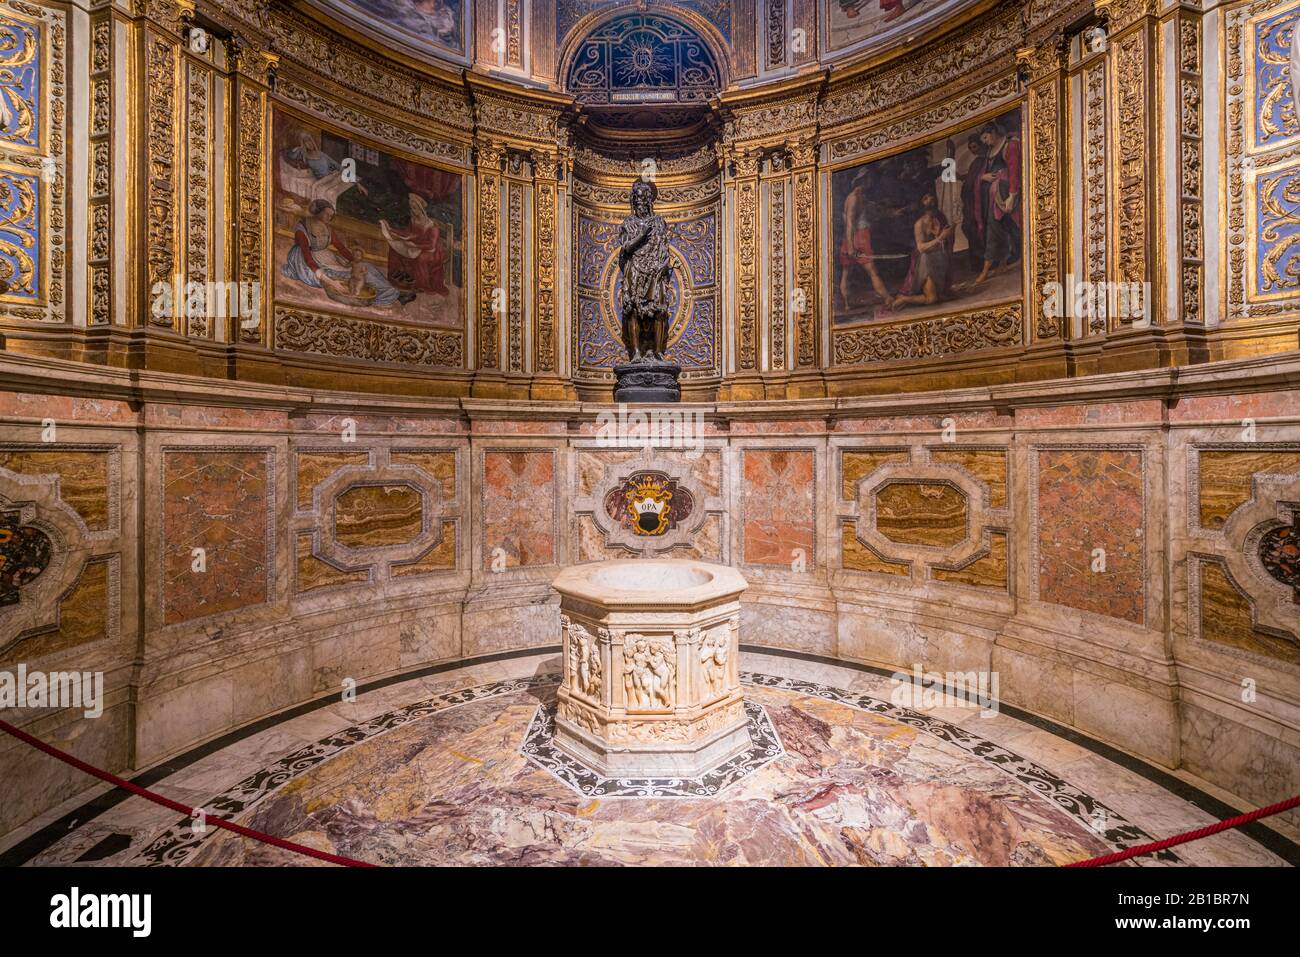 Chapel of Saint John Baptist with statue from Donatello, in the Duomo of Siena, Tuscany, Italy. Stock Photo